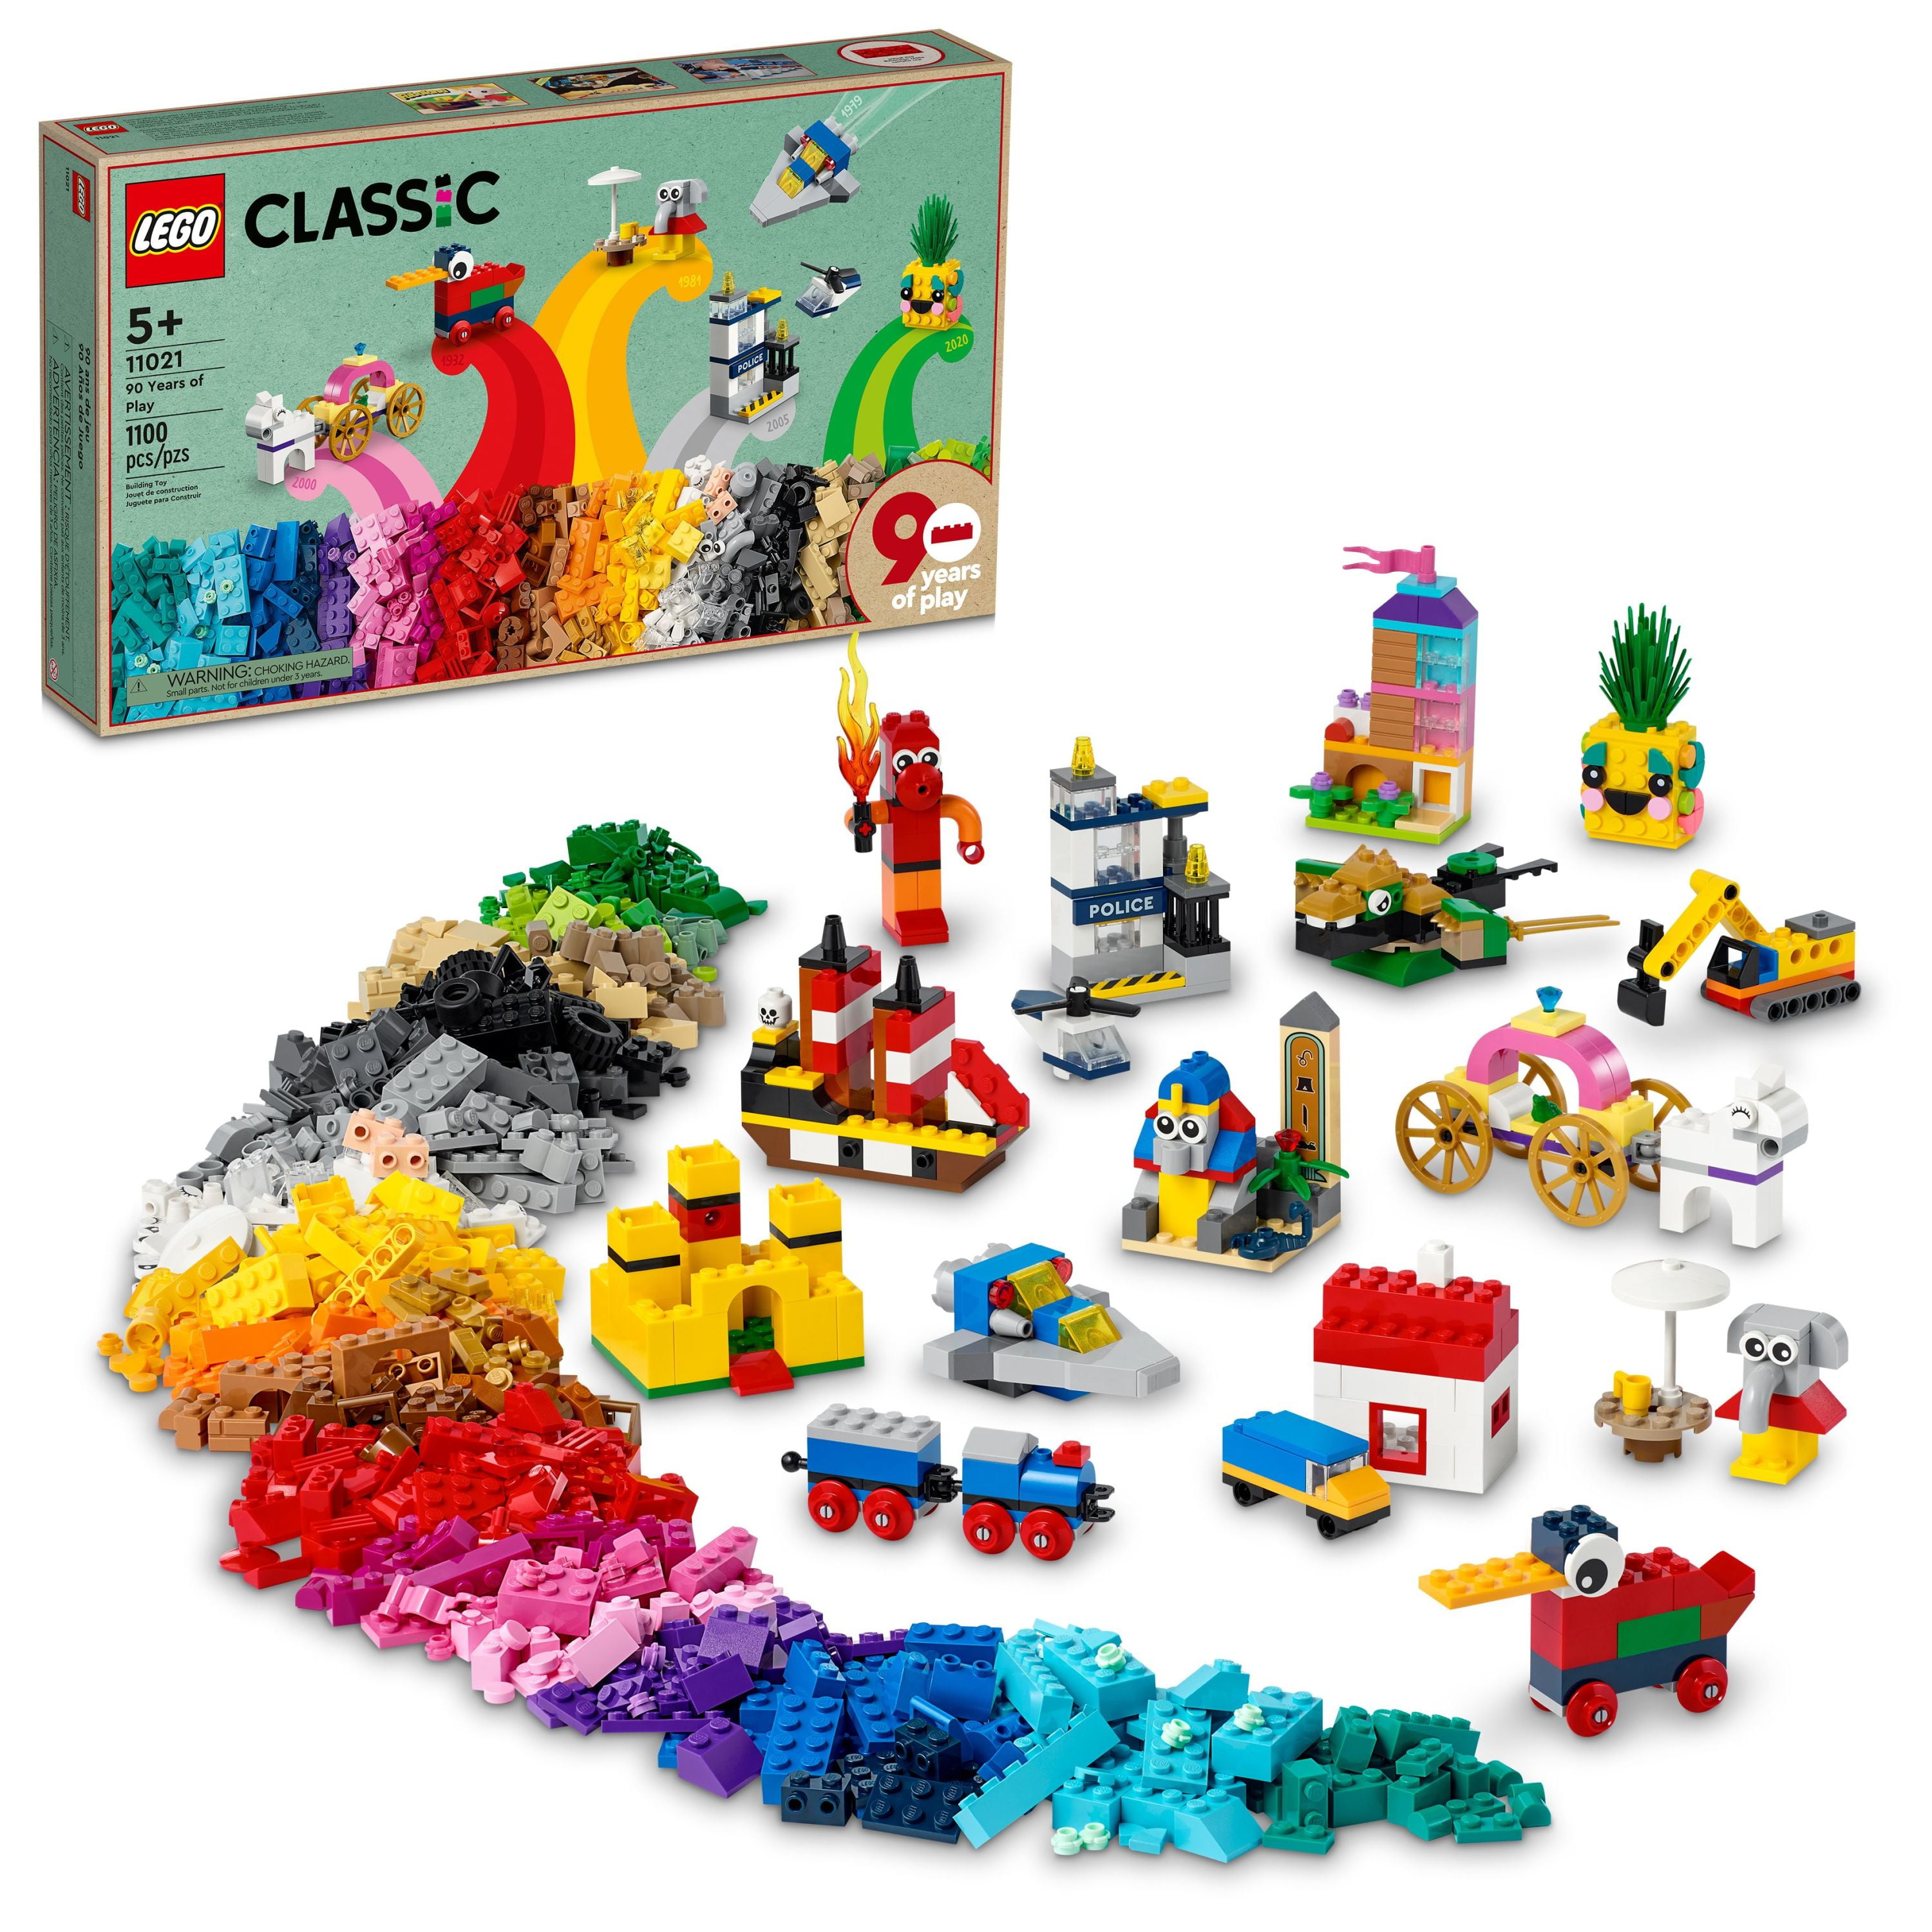 træk uld over øjnene molester Ruddy LEGO Classic 90 Years of Play Building Set with 15 Mini Builds 11021 -  Walmart.com